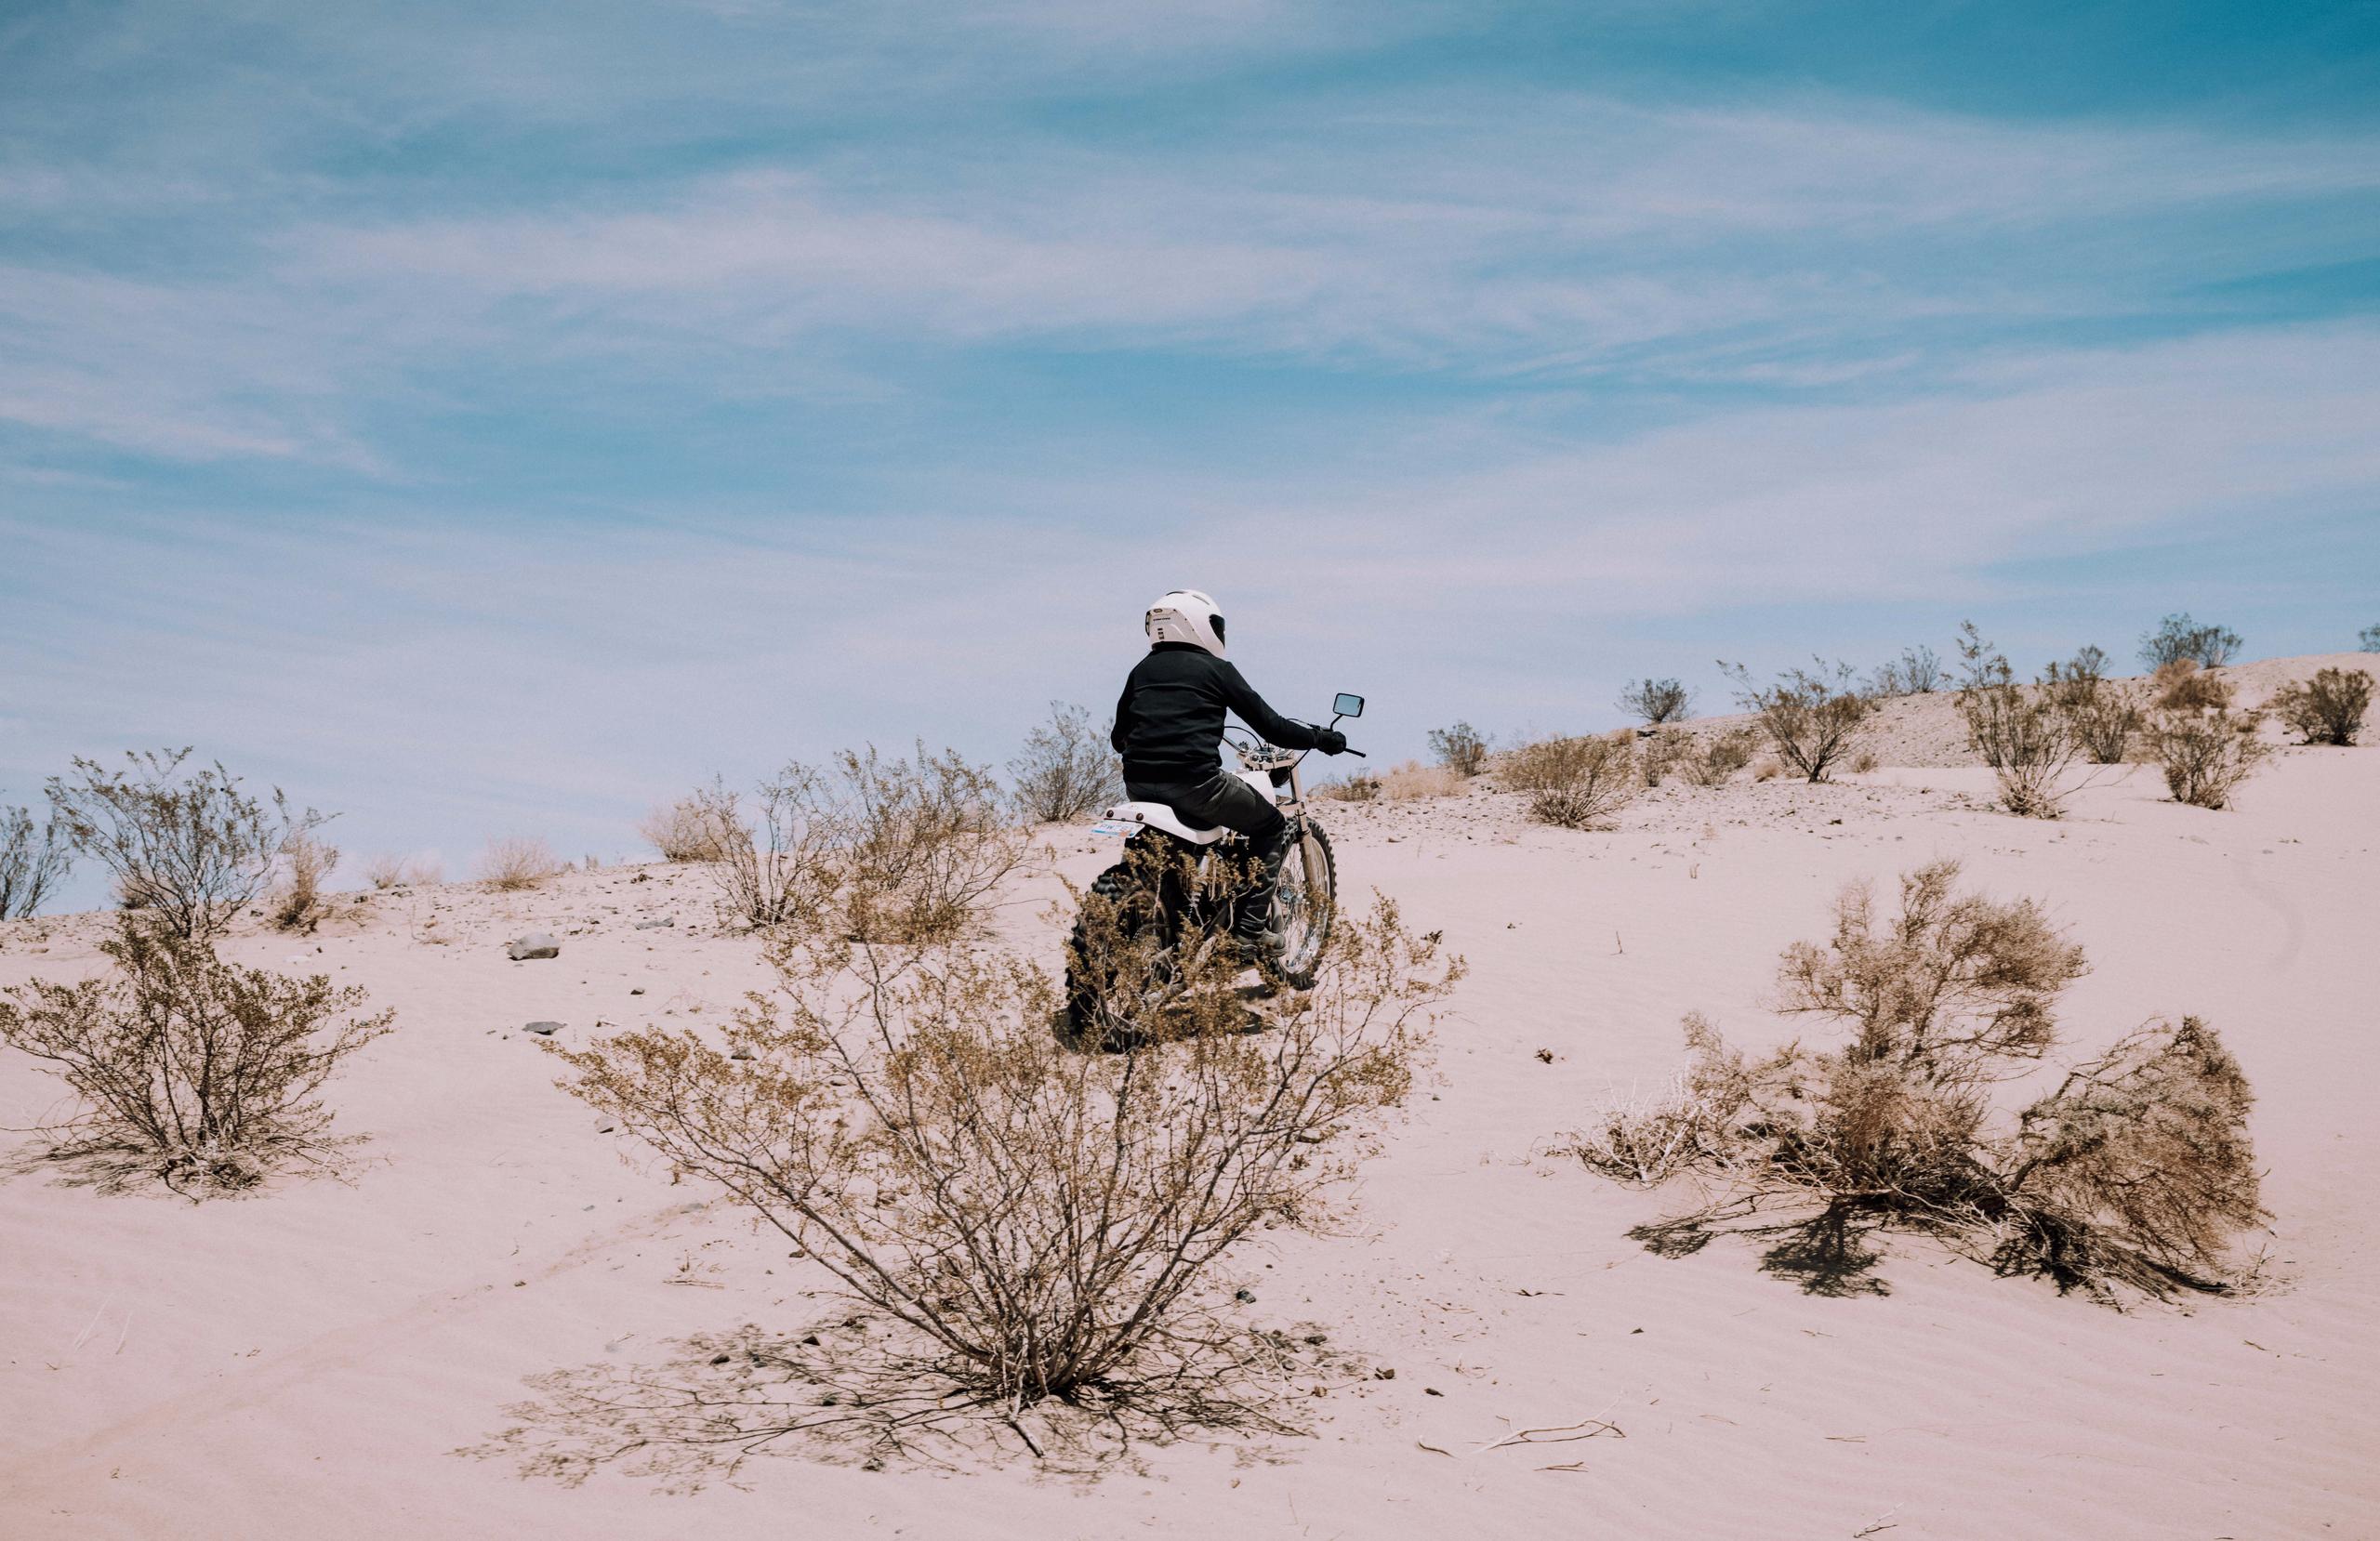 Man riding motorcycle through desert landscape